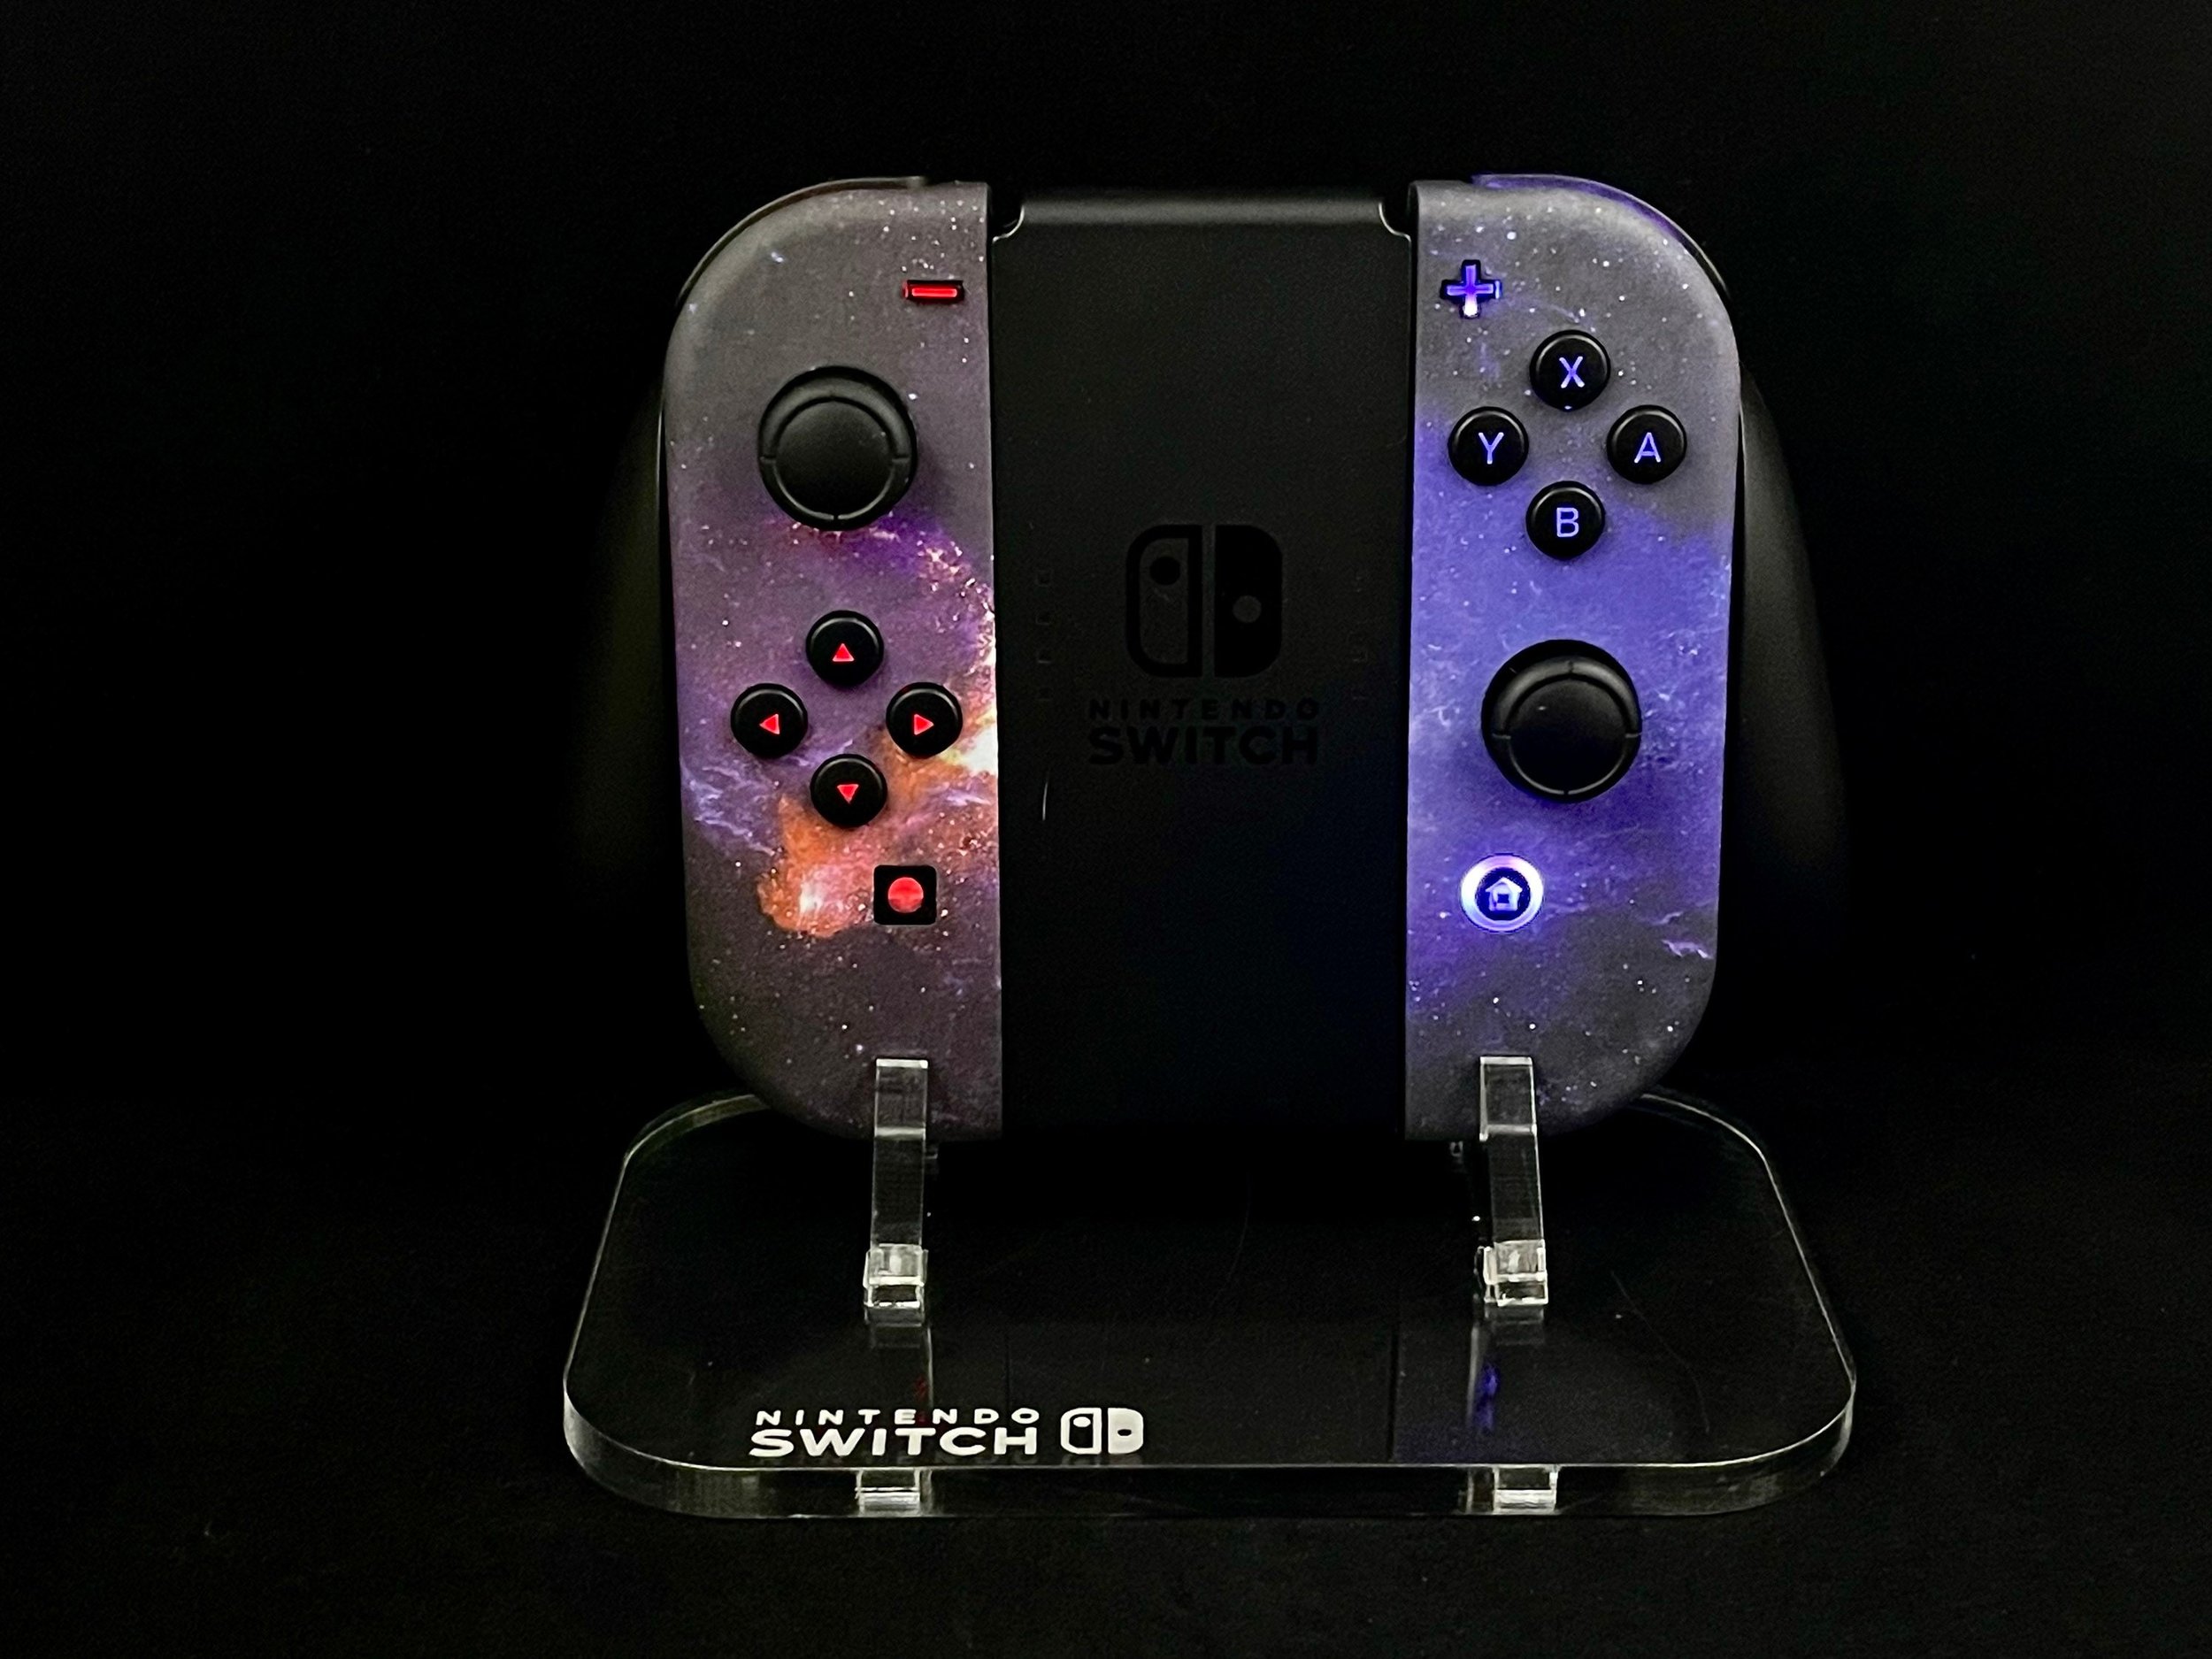 Galaxy - Nintendo Switch Joy-Cons - Custom Controllers - Controller Chaos